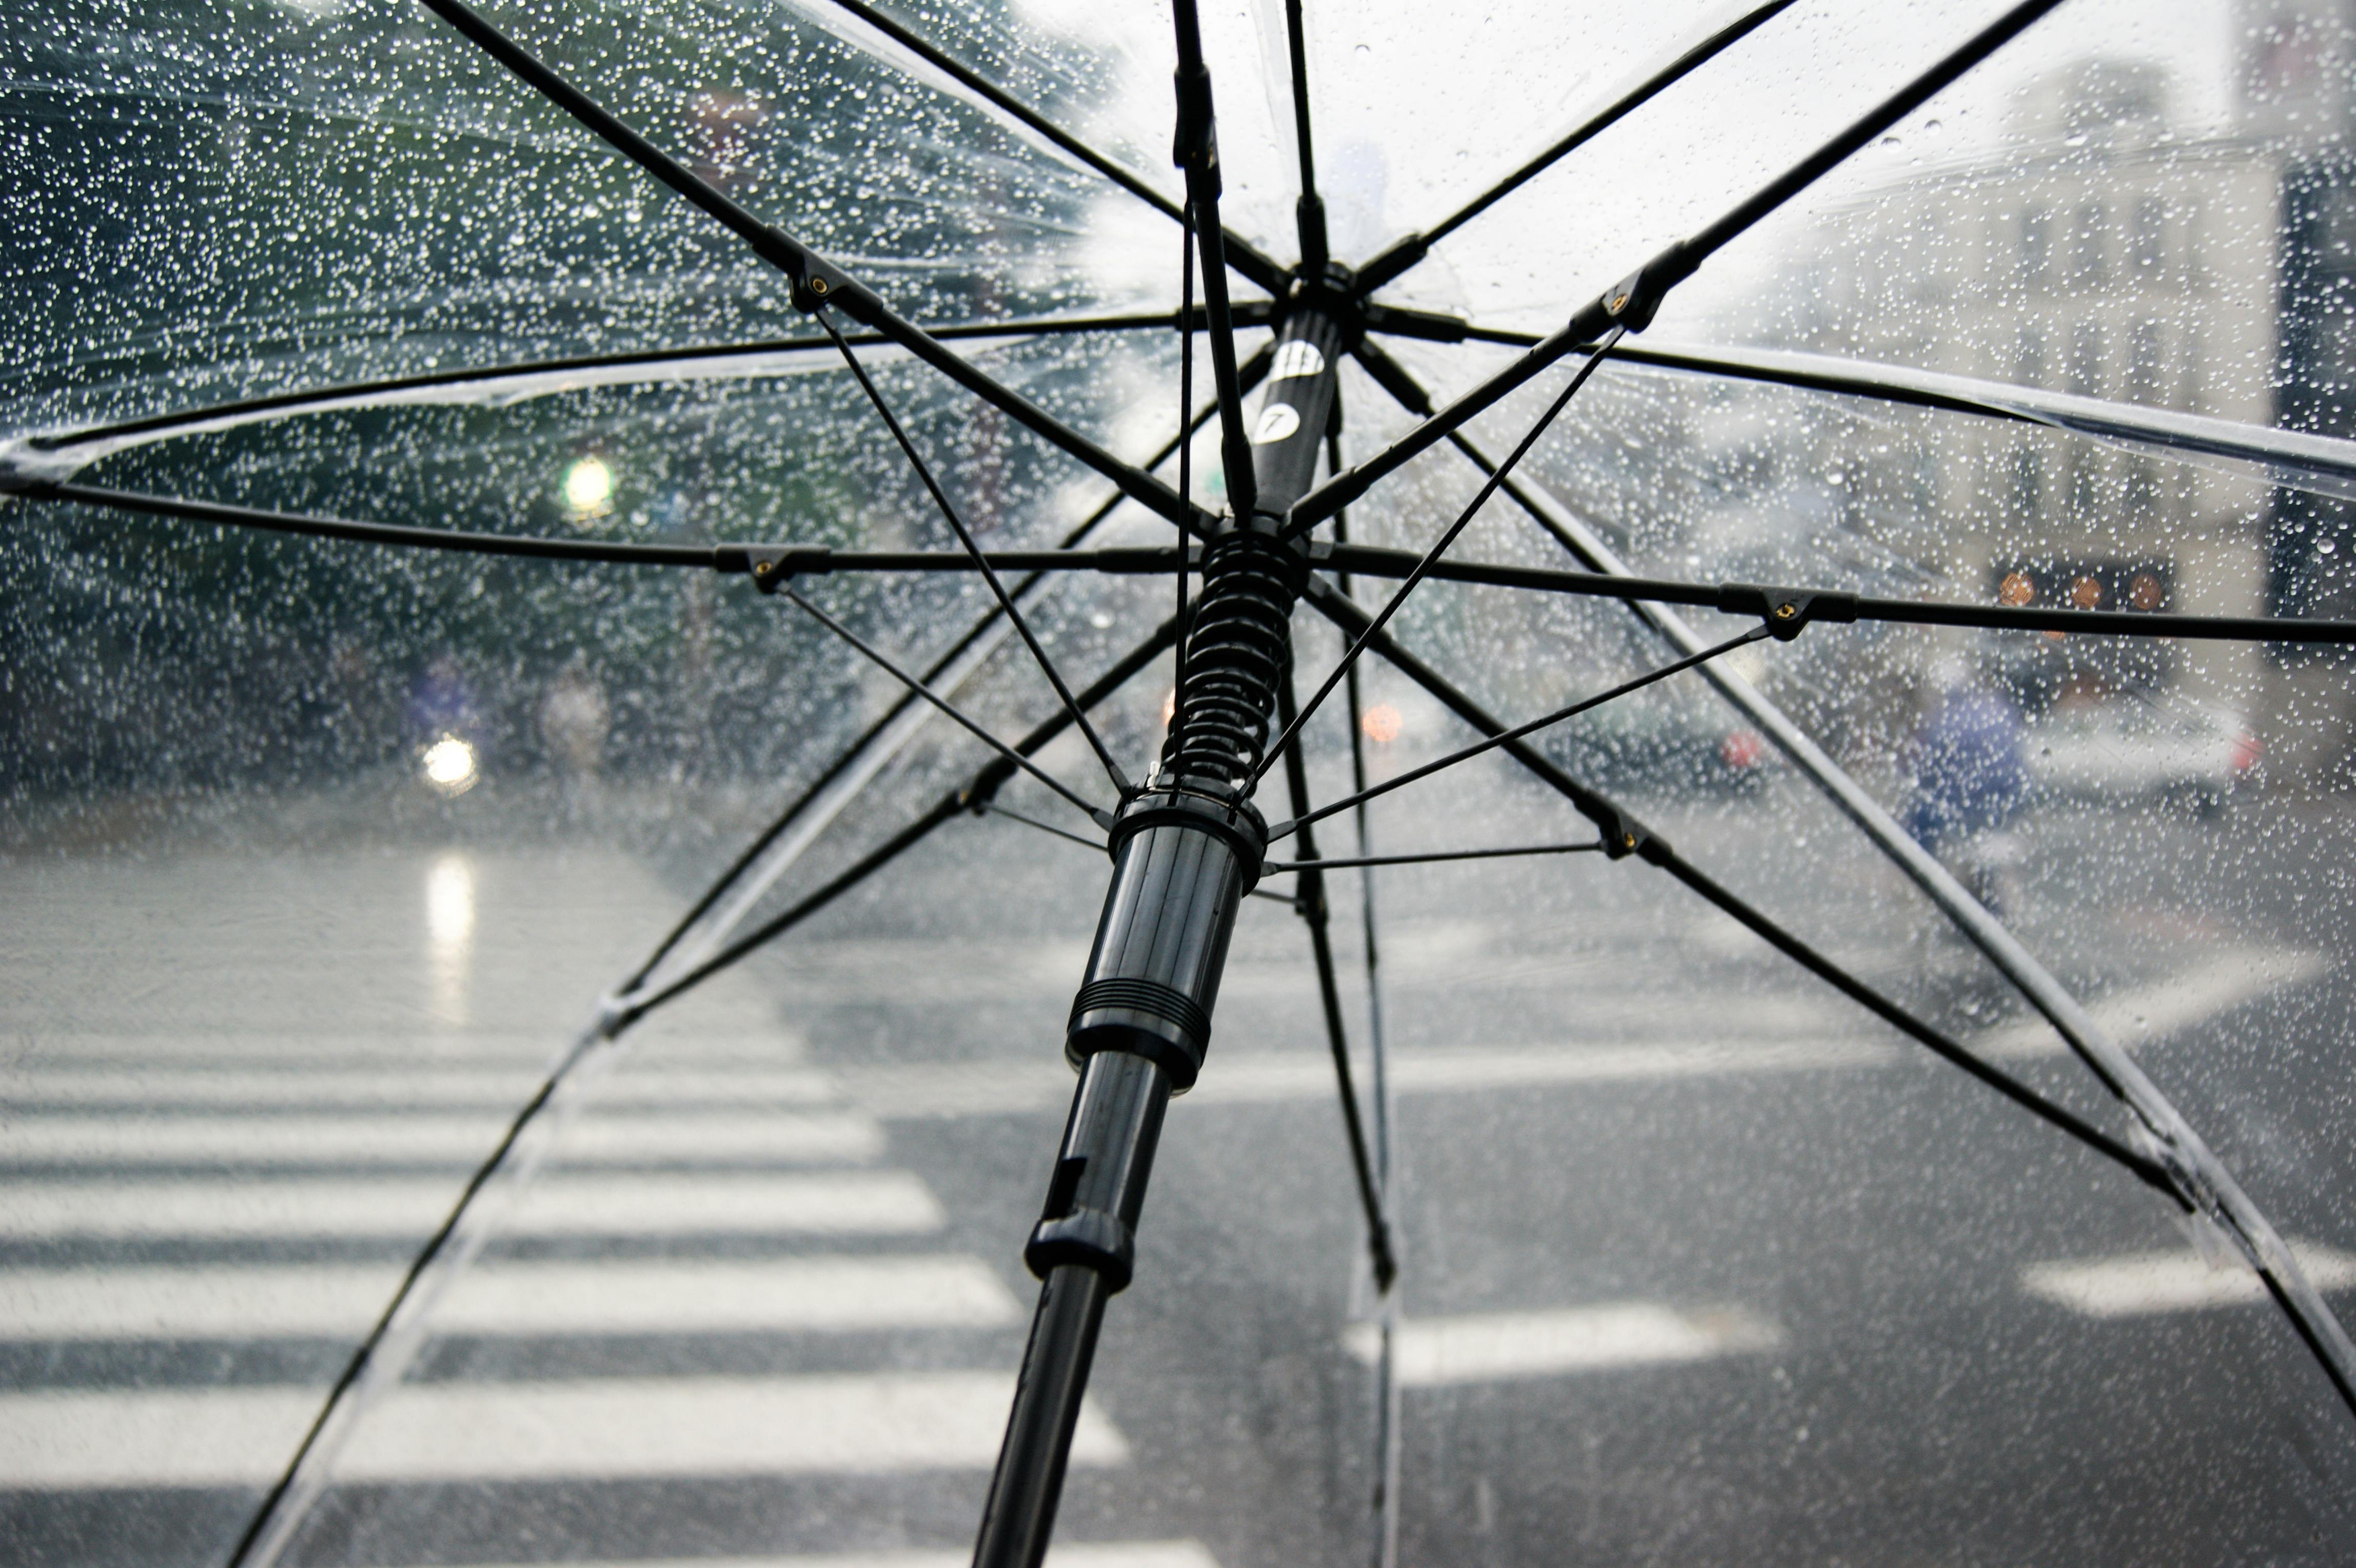 rain umbrella background